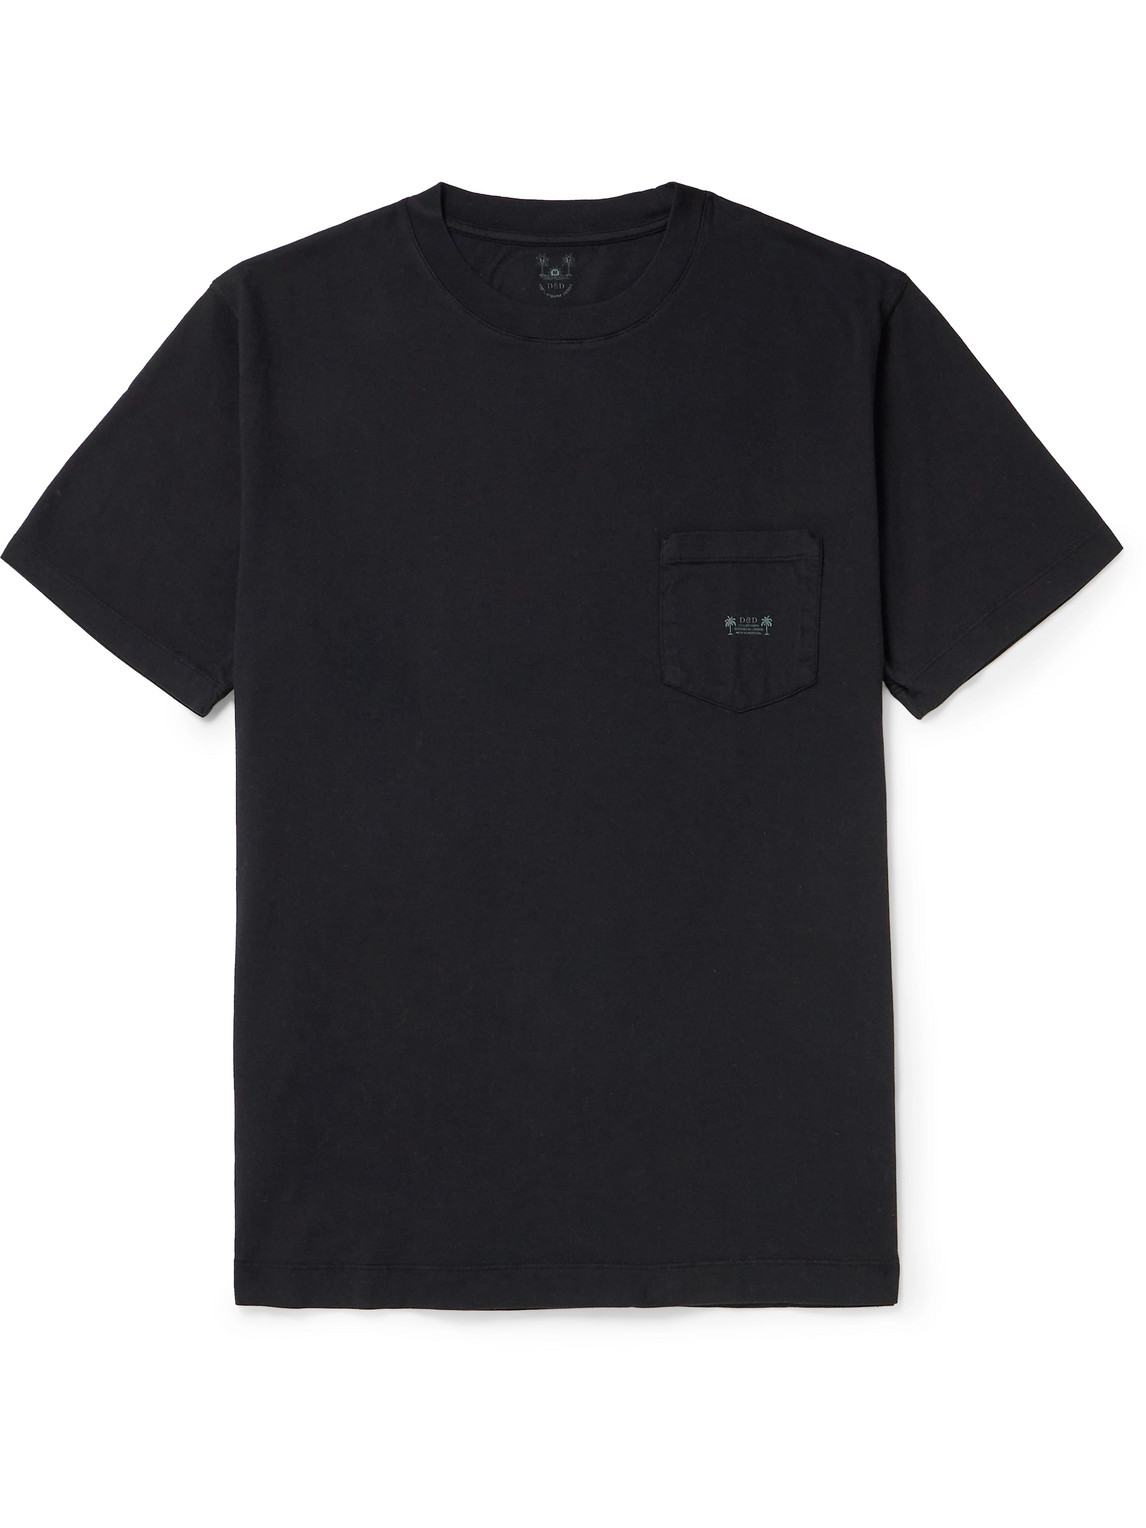 Desmond & Dempsey Logo-print Cotton-jersey Pyjama T-shirt In Black